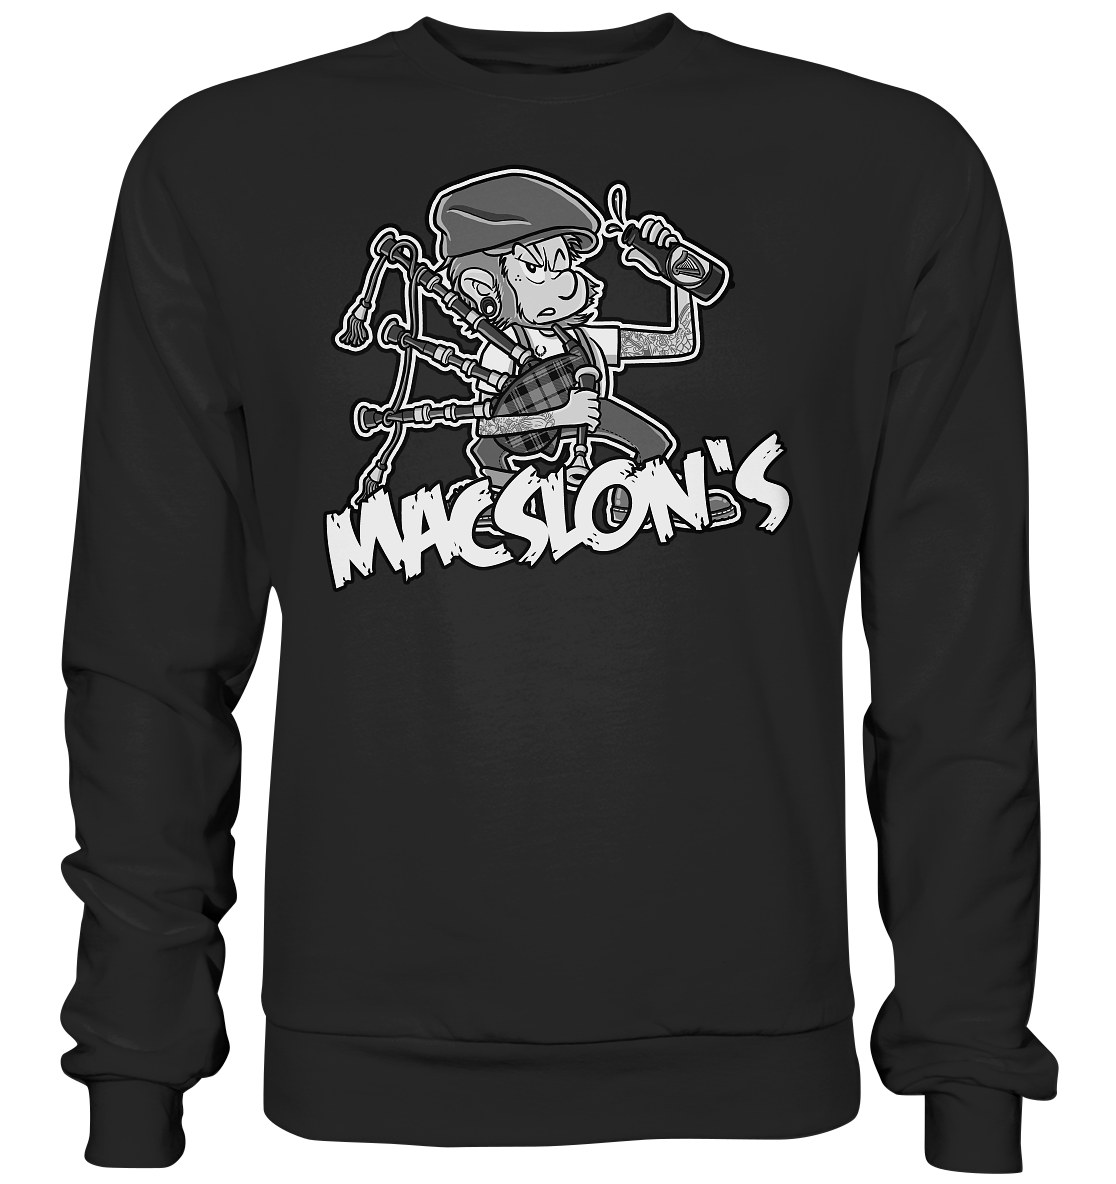 MacSlon's "Piper" - Premium Sweatshirt